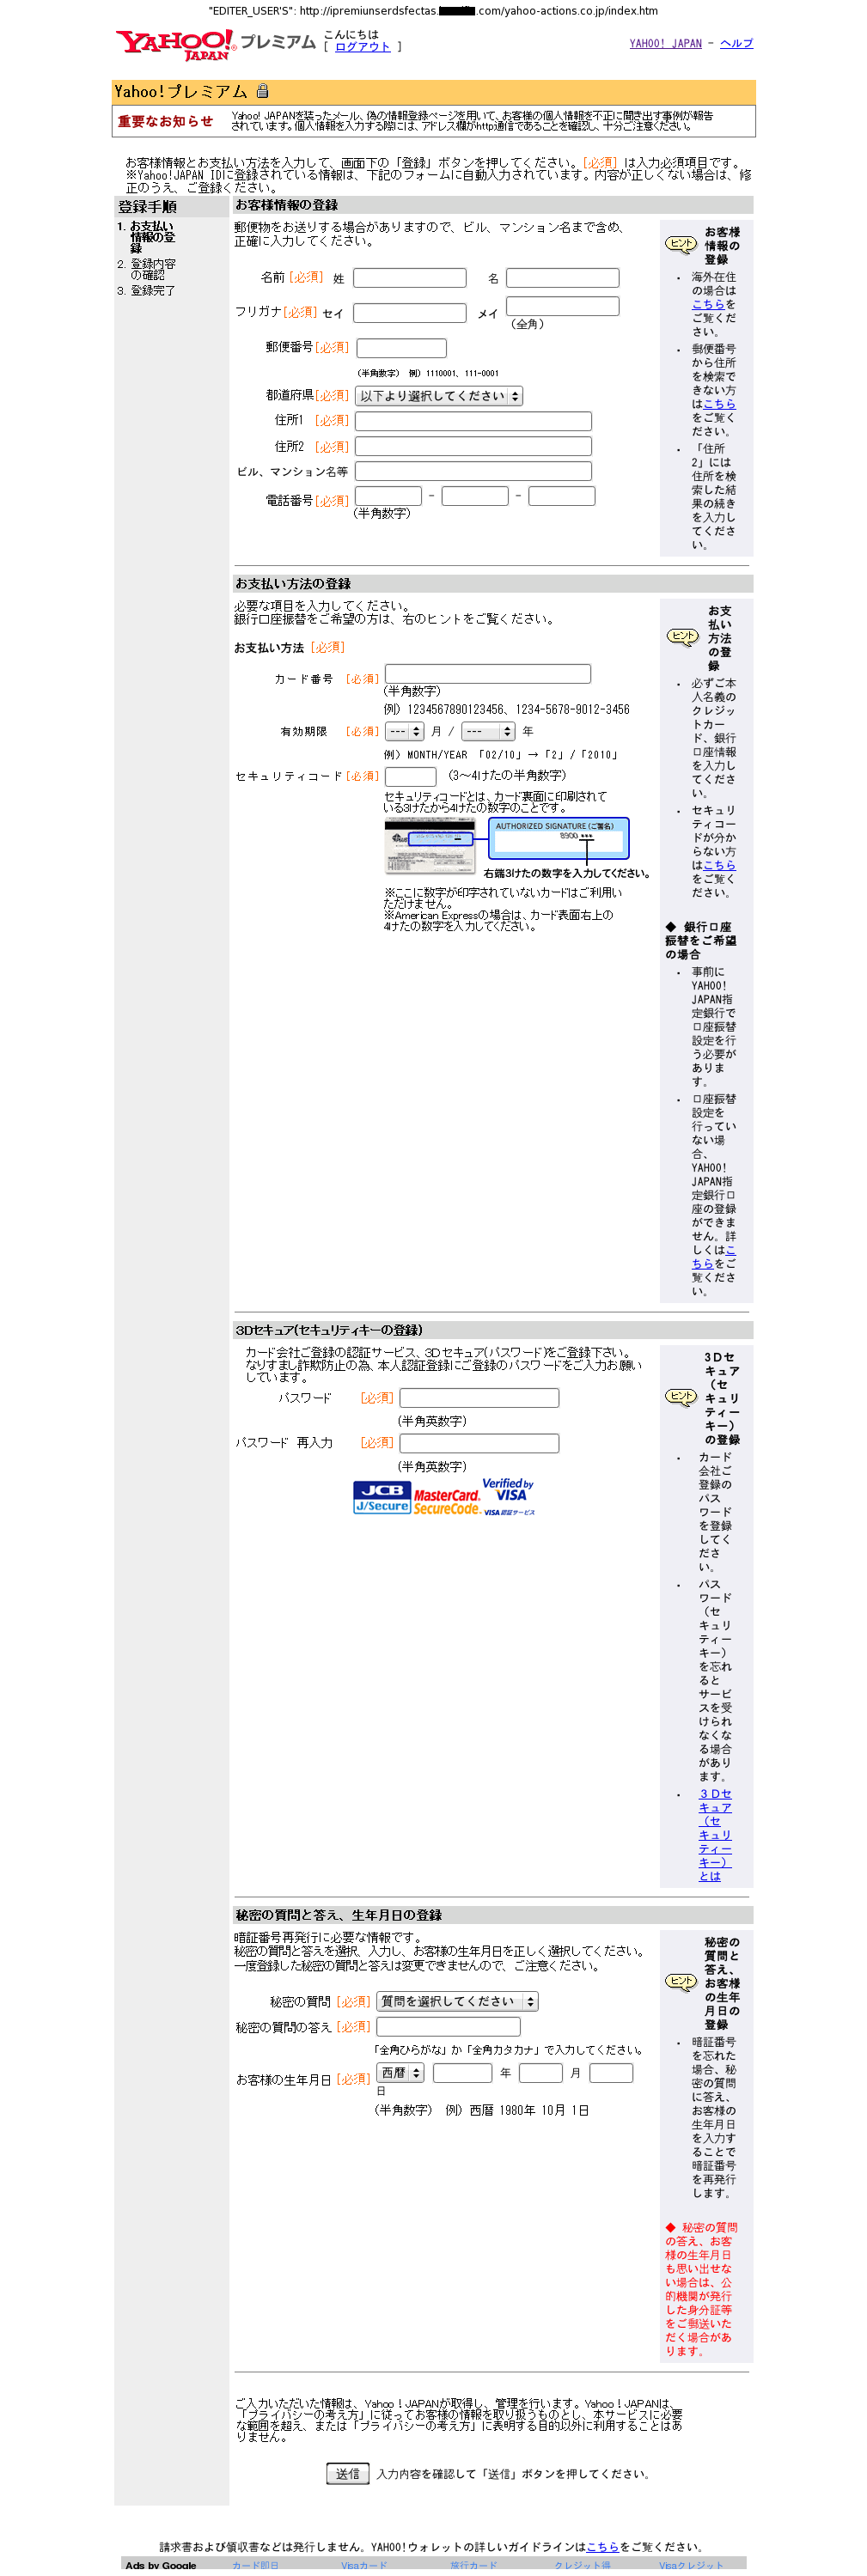 Yahoo! JAPANをかたるフィッシング1(2009/9/14)